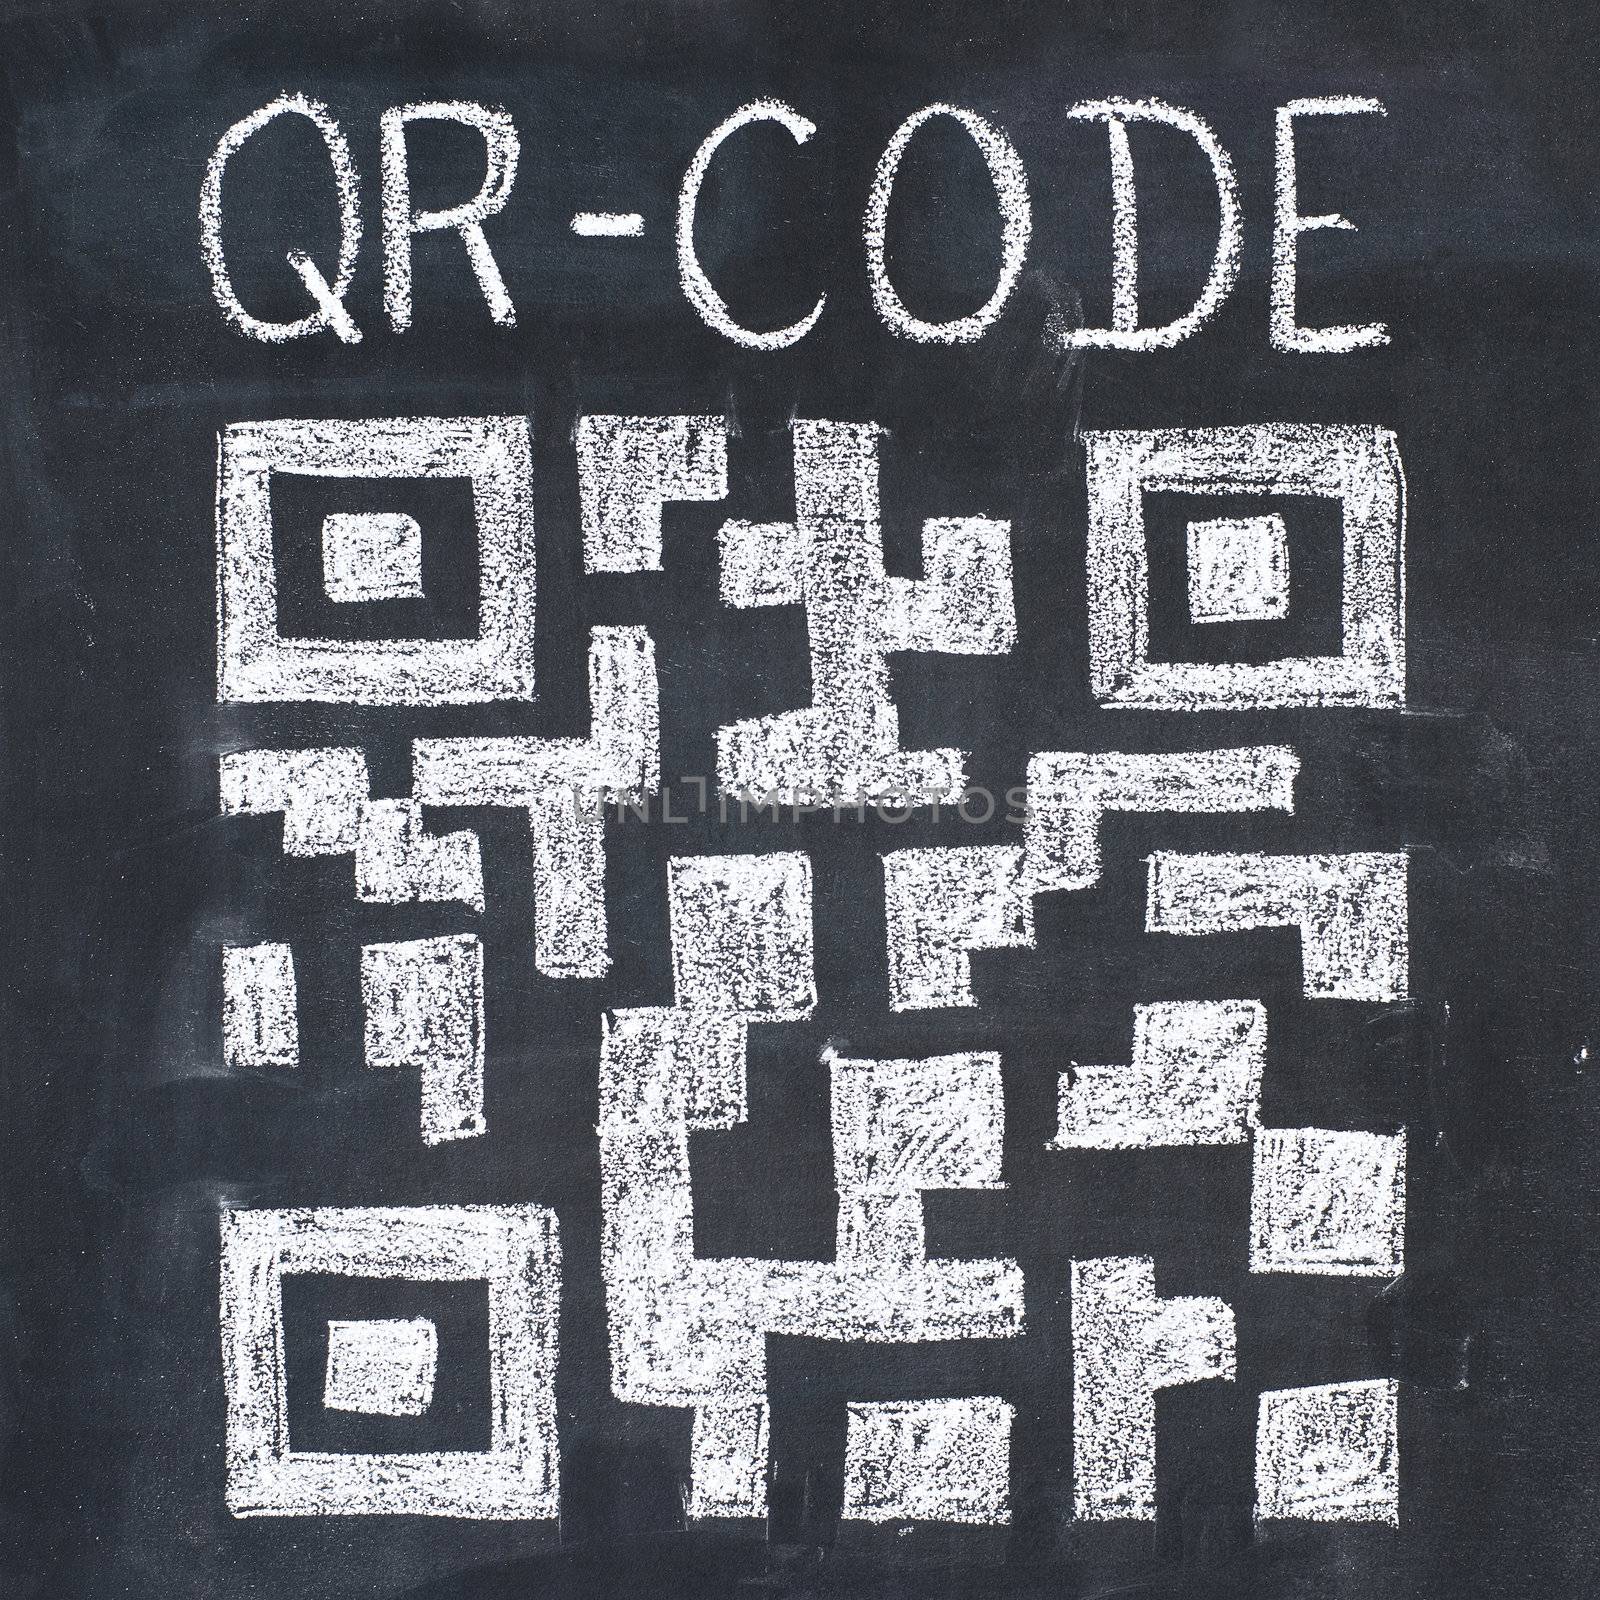 Quick Response Code (qr-code) on a blackboard, chalk drawing